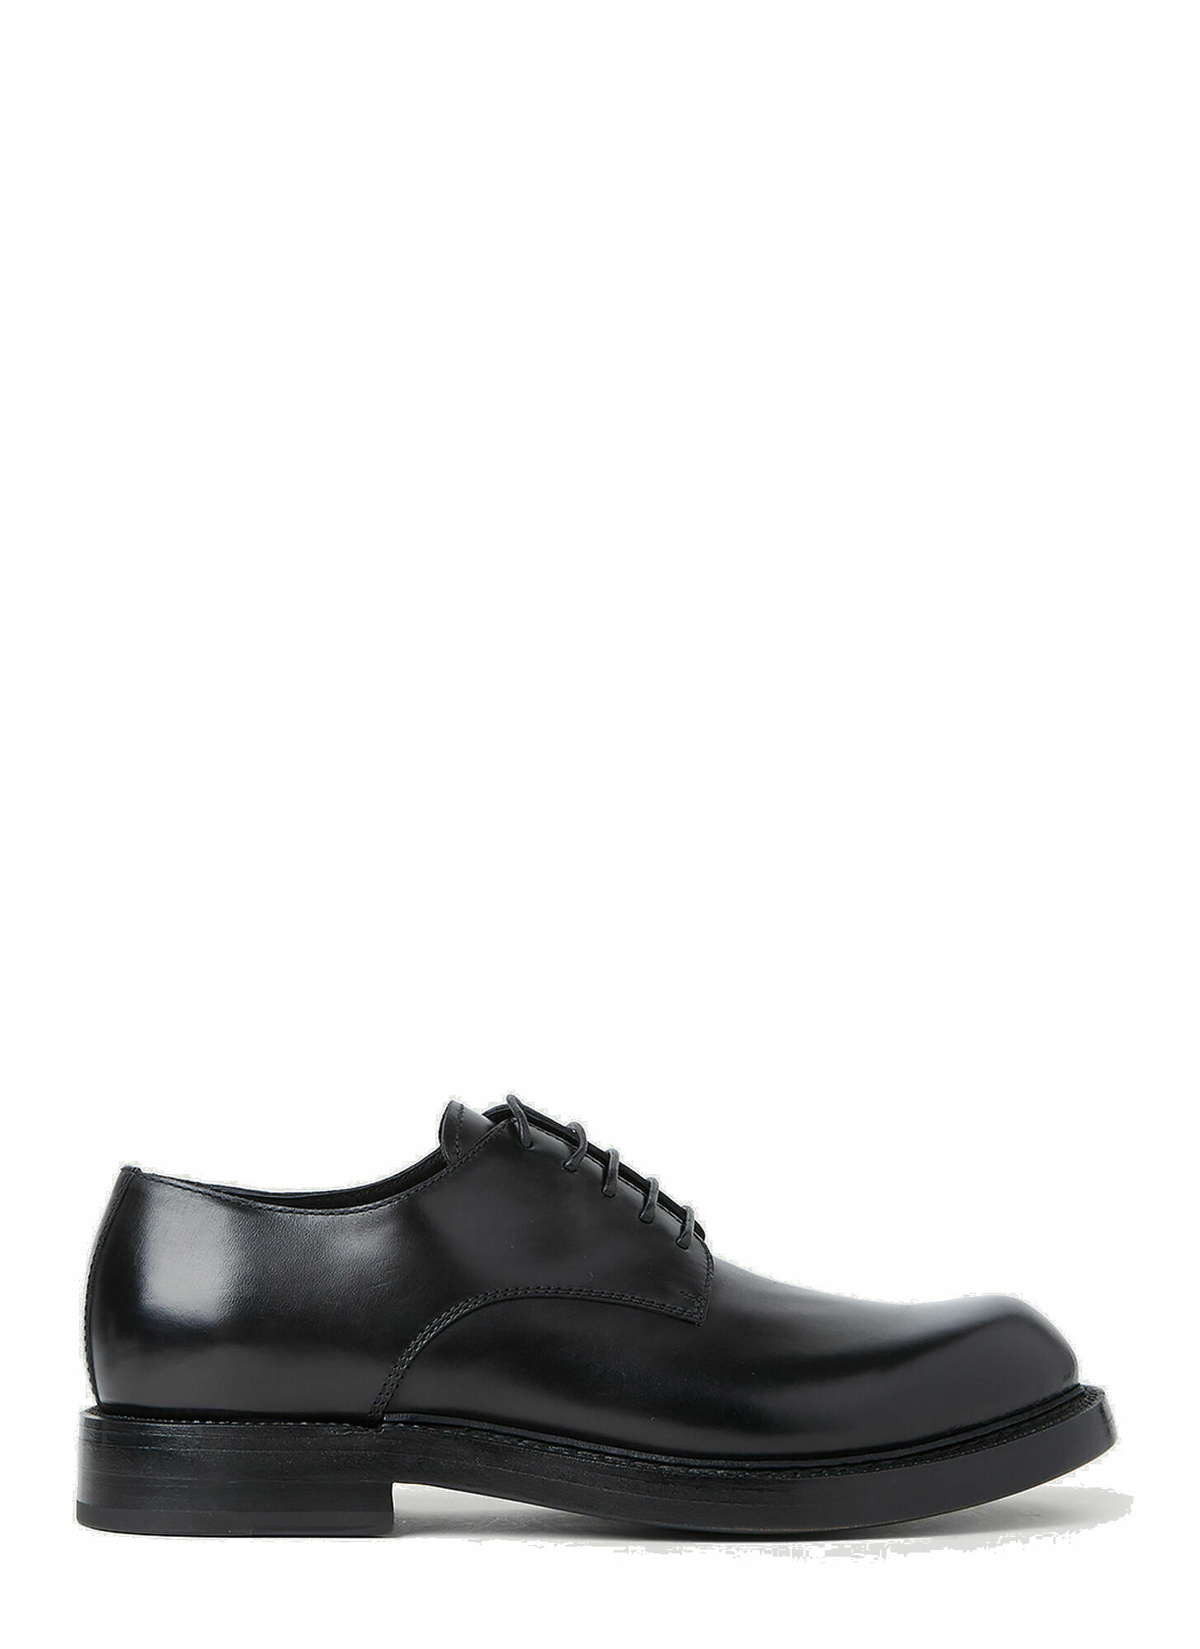 Ann Demeulemeester - Godart Derby Shoes in Black Ann Demeulemeester